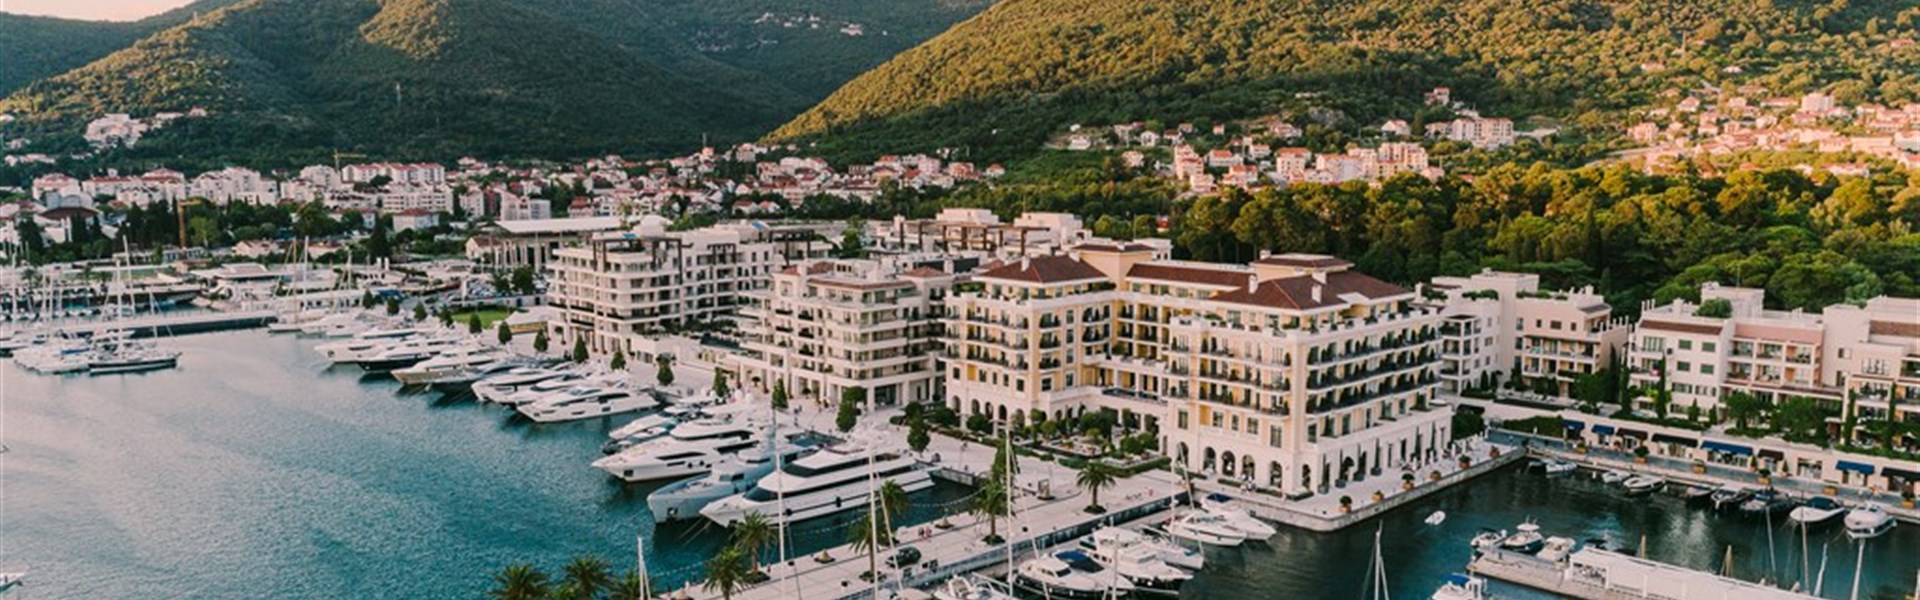 Marco Polo - Hotel Regent Porto Montenegro - 